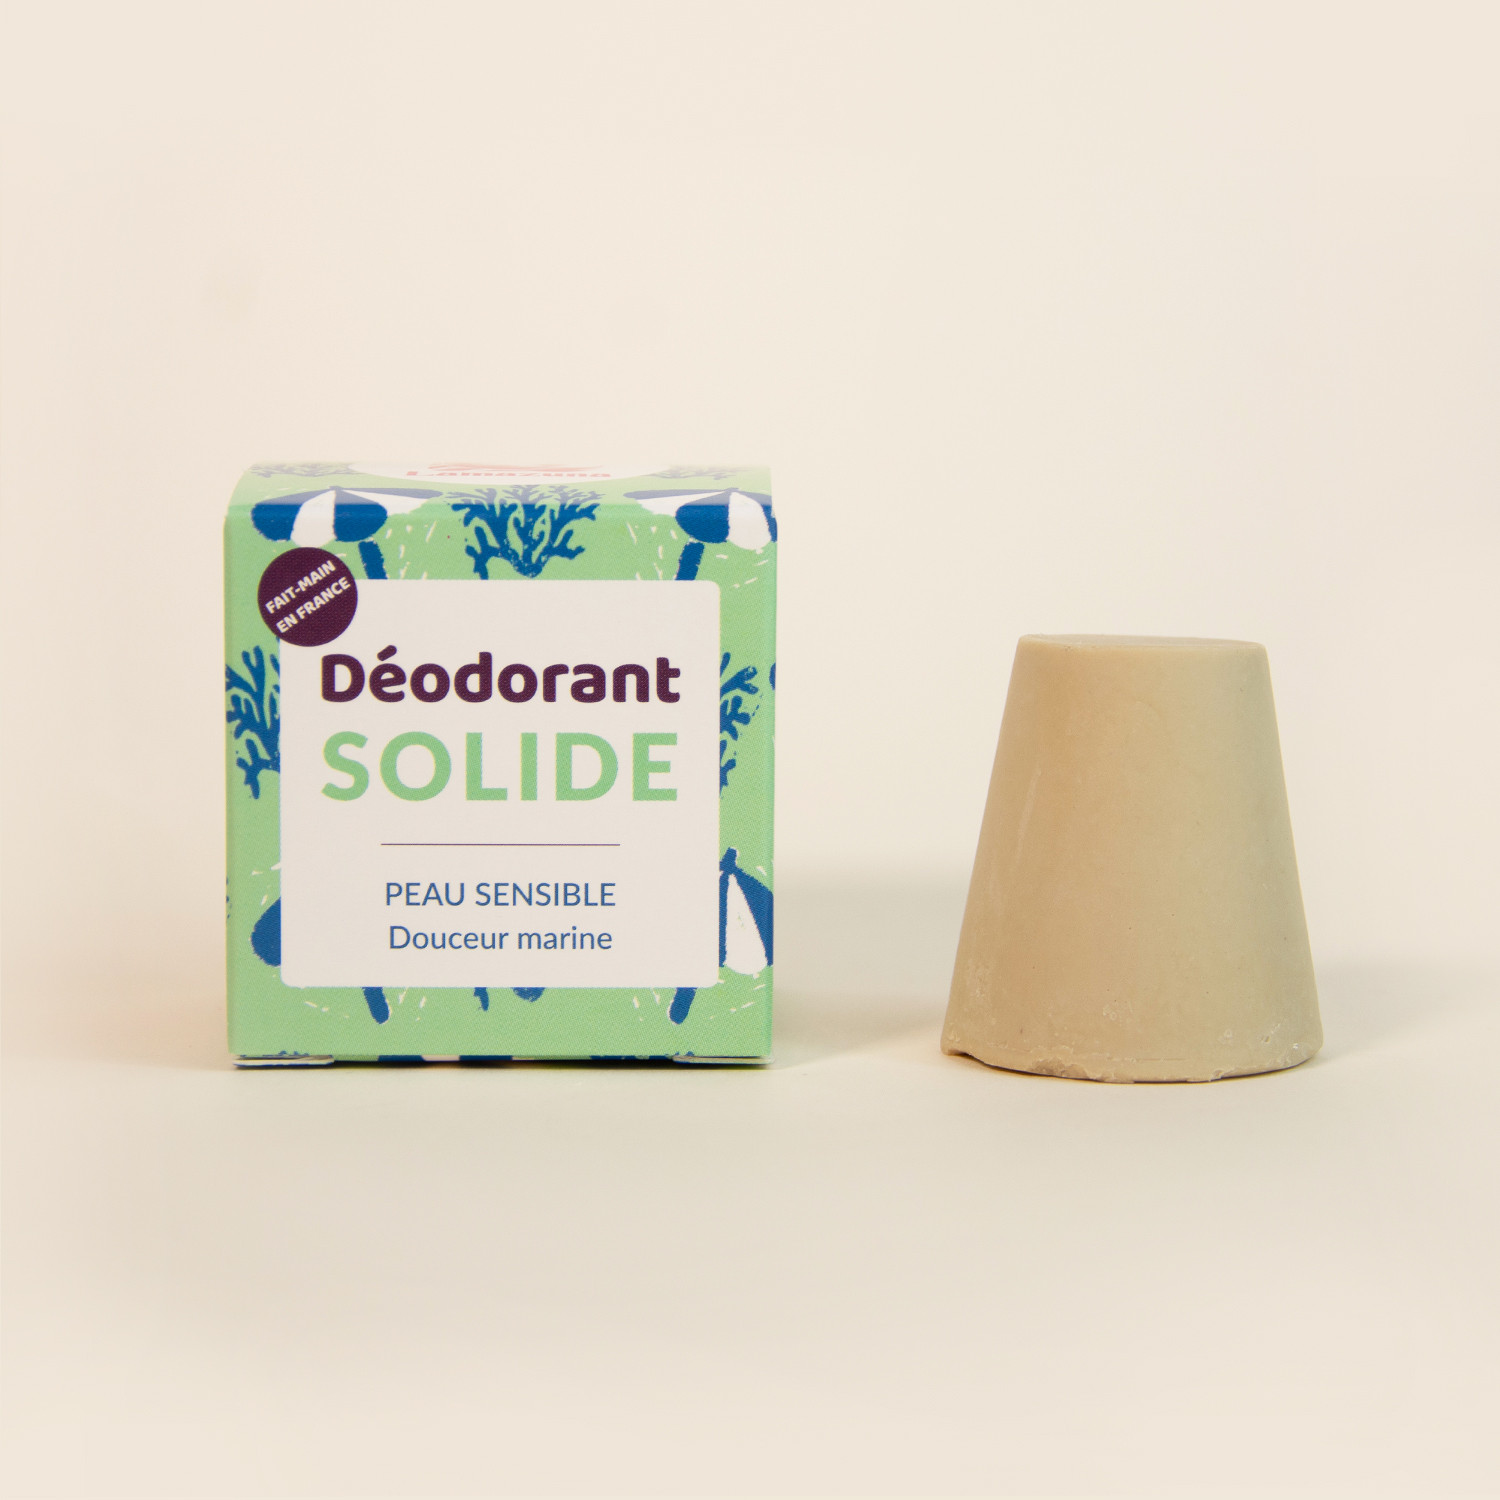 Deodorant for sensitive...